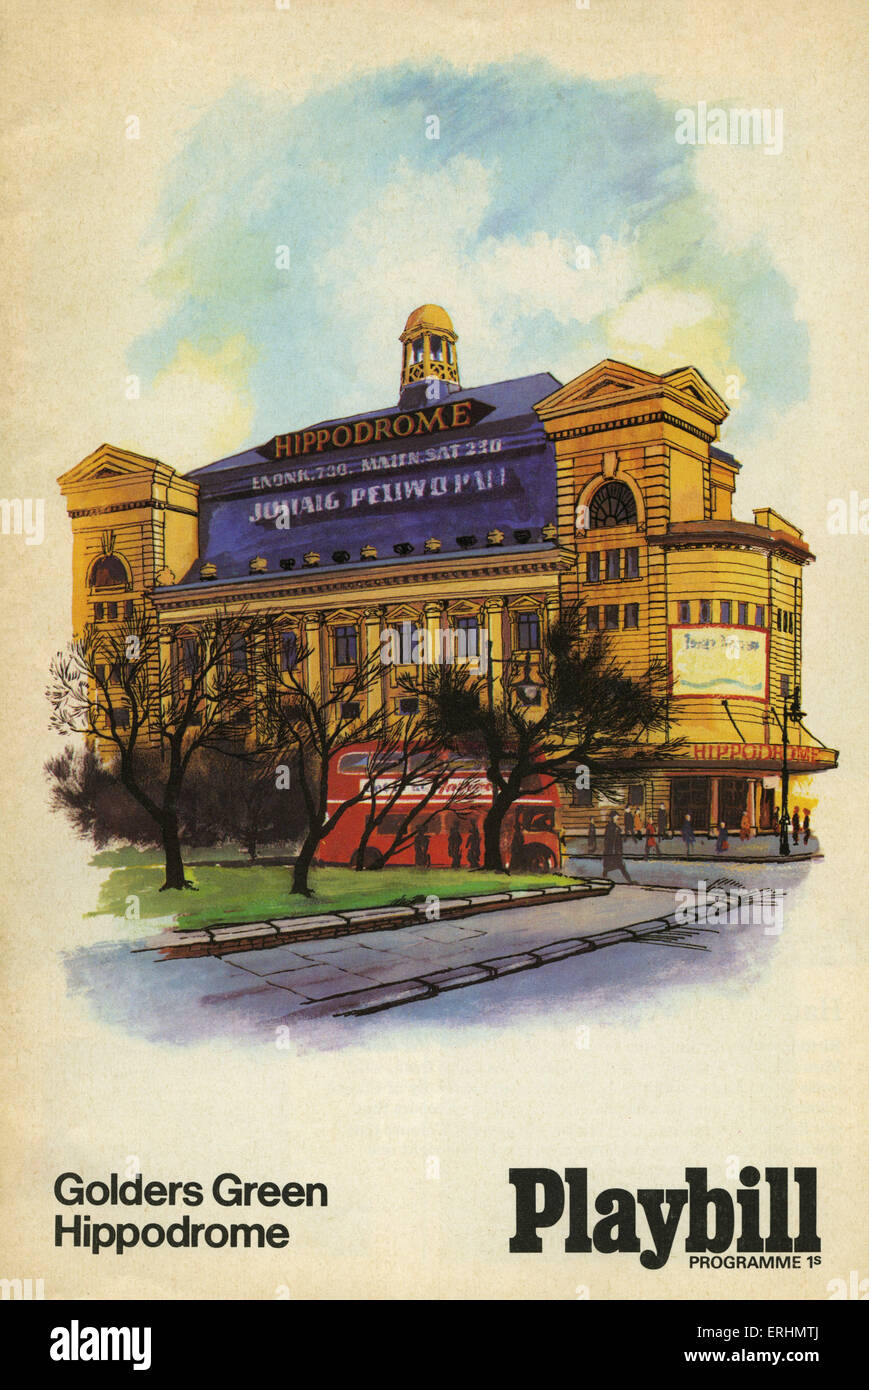 Golders Green Hippodrome on programme cover. C.1967. 'Playbill' programme. Stock Photo